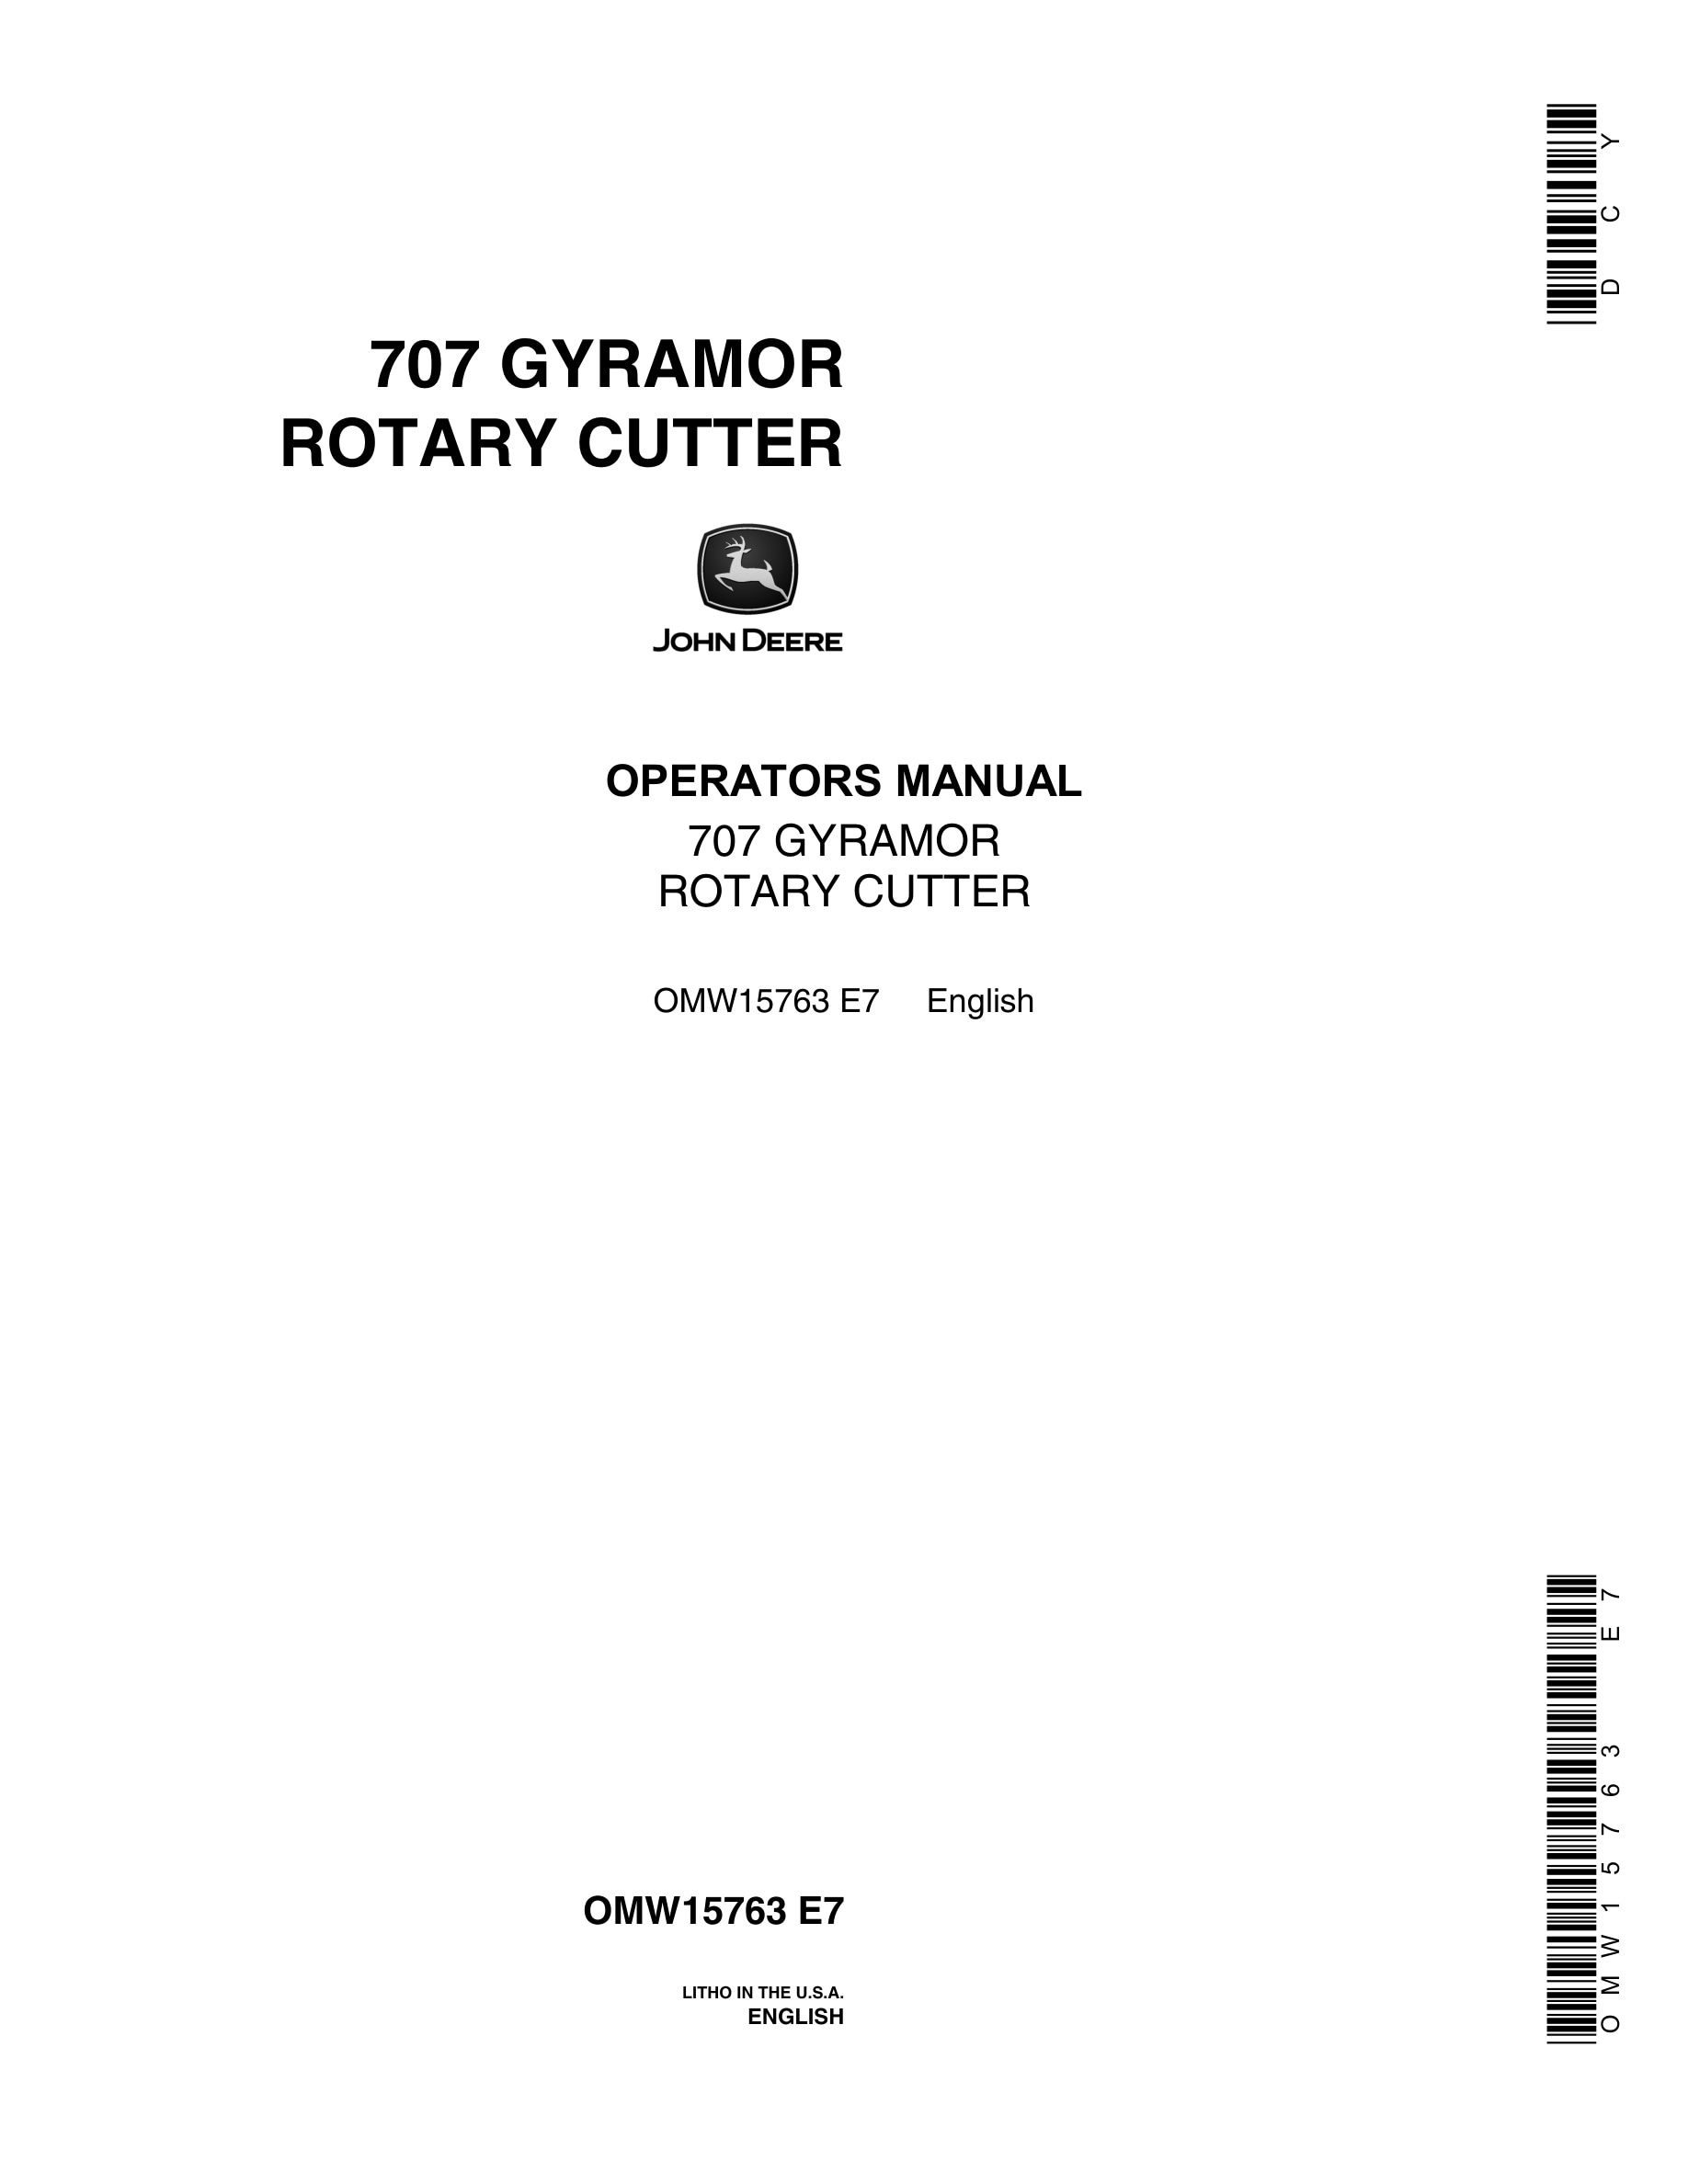 John Deere 707 GYRAMOR ROTARY CUTTER Operator Manual OMW15763-1